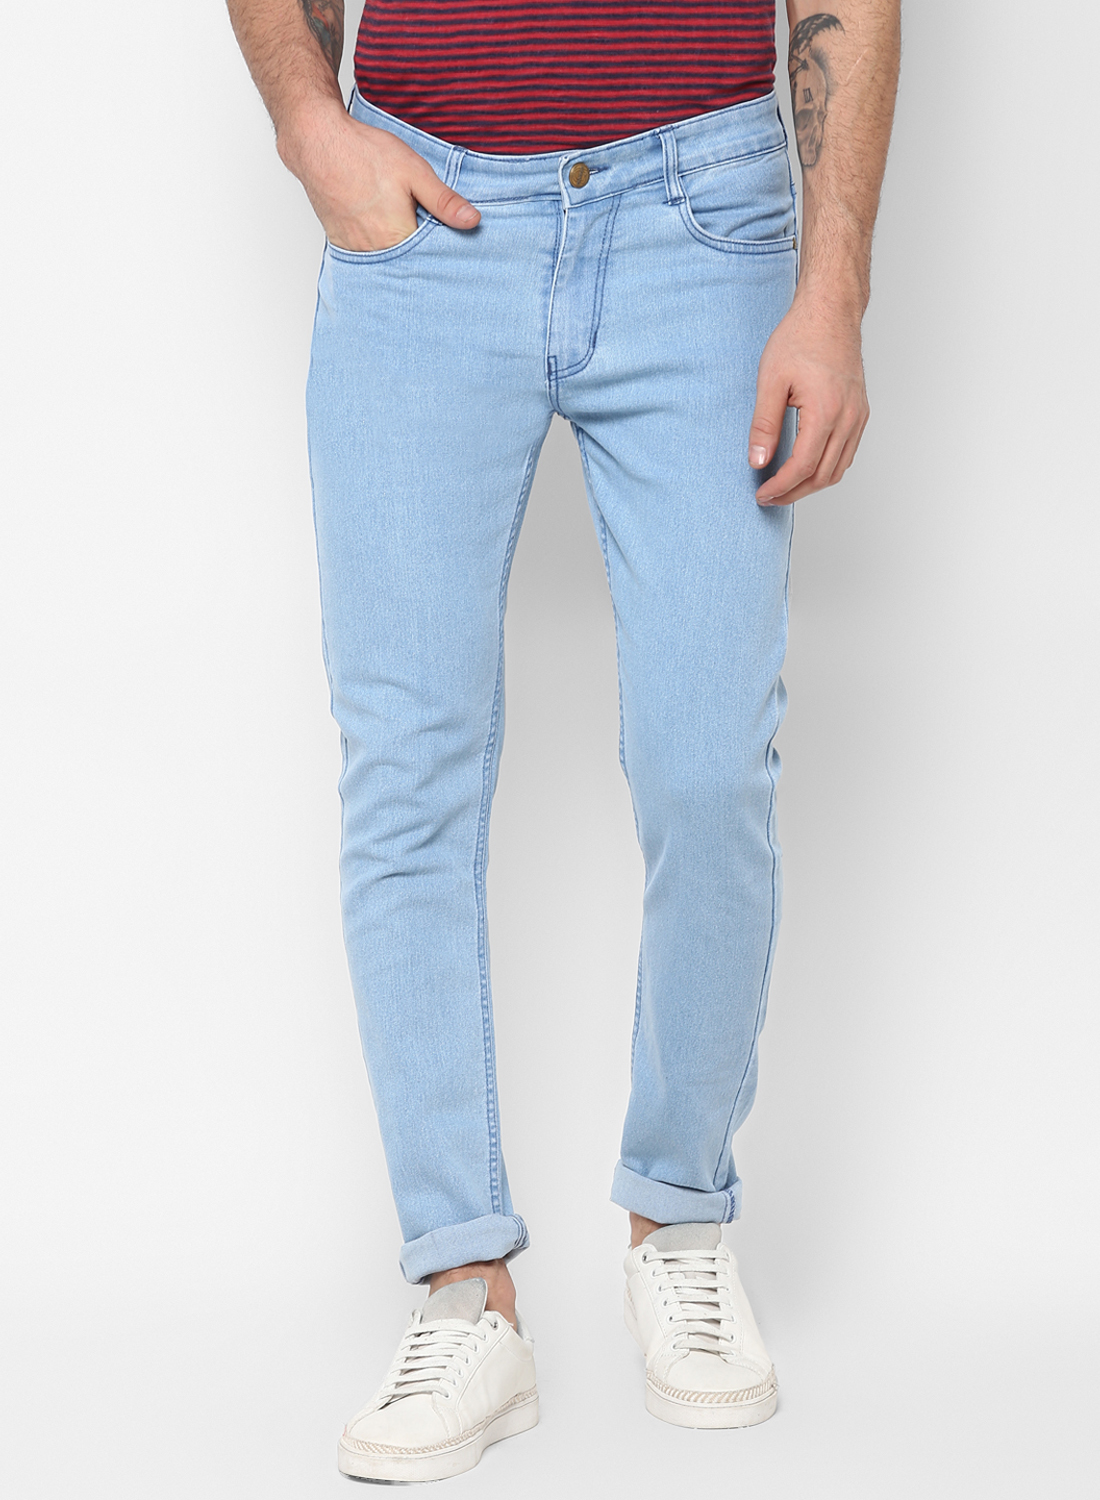 Buy Urbano Fashion Men's Ice Blue Slim Fit Denim Jeans Stretchable ...